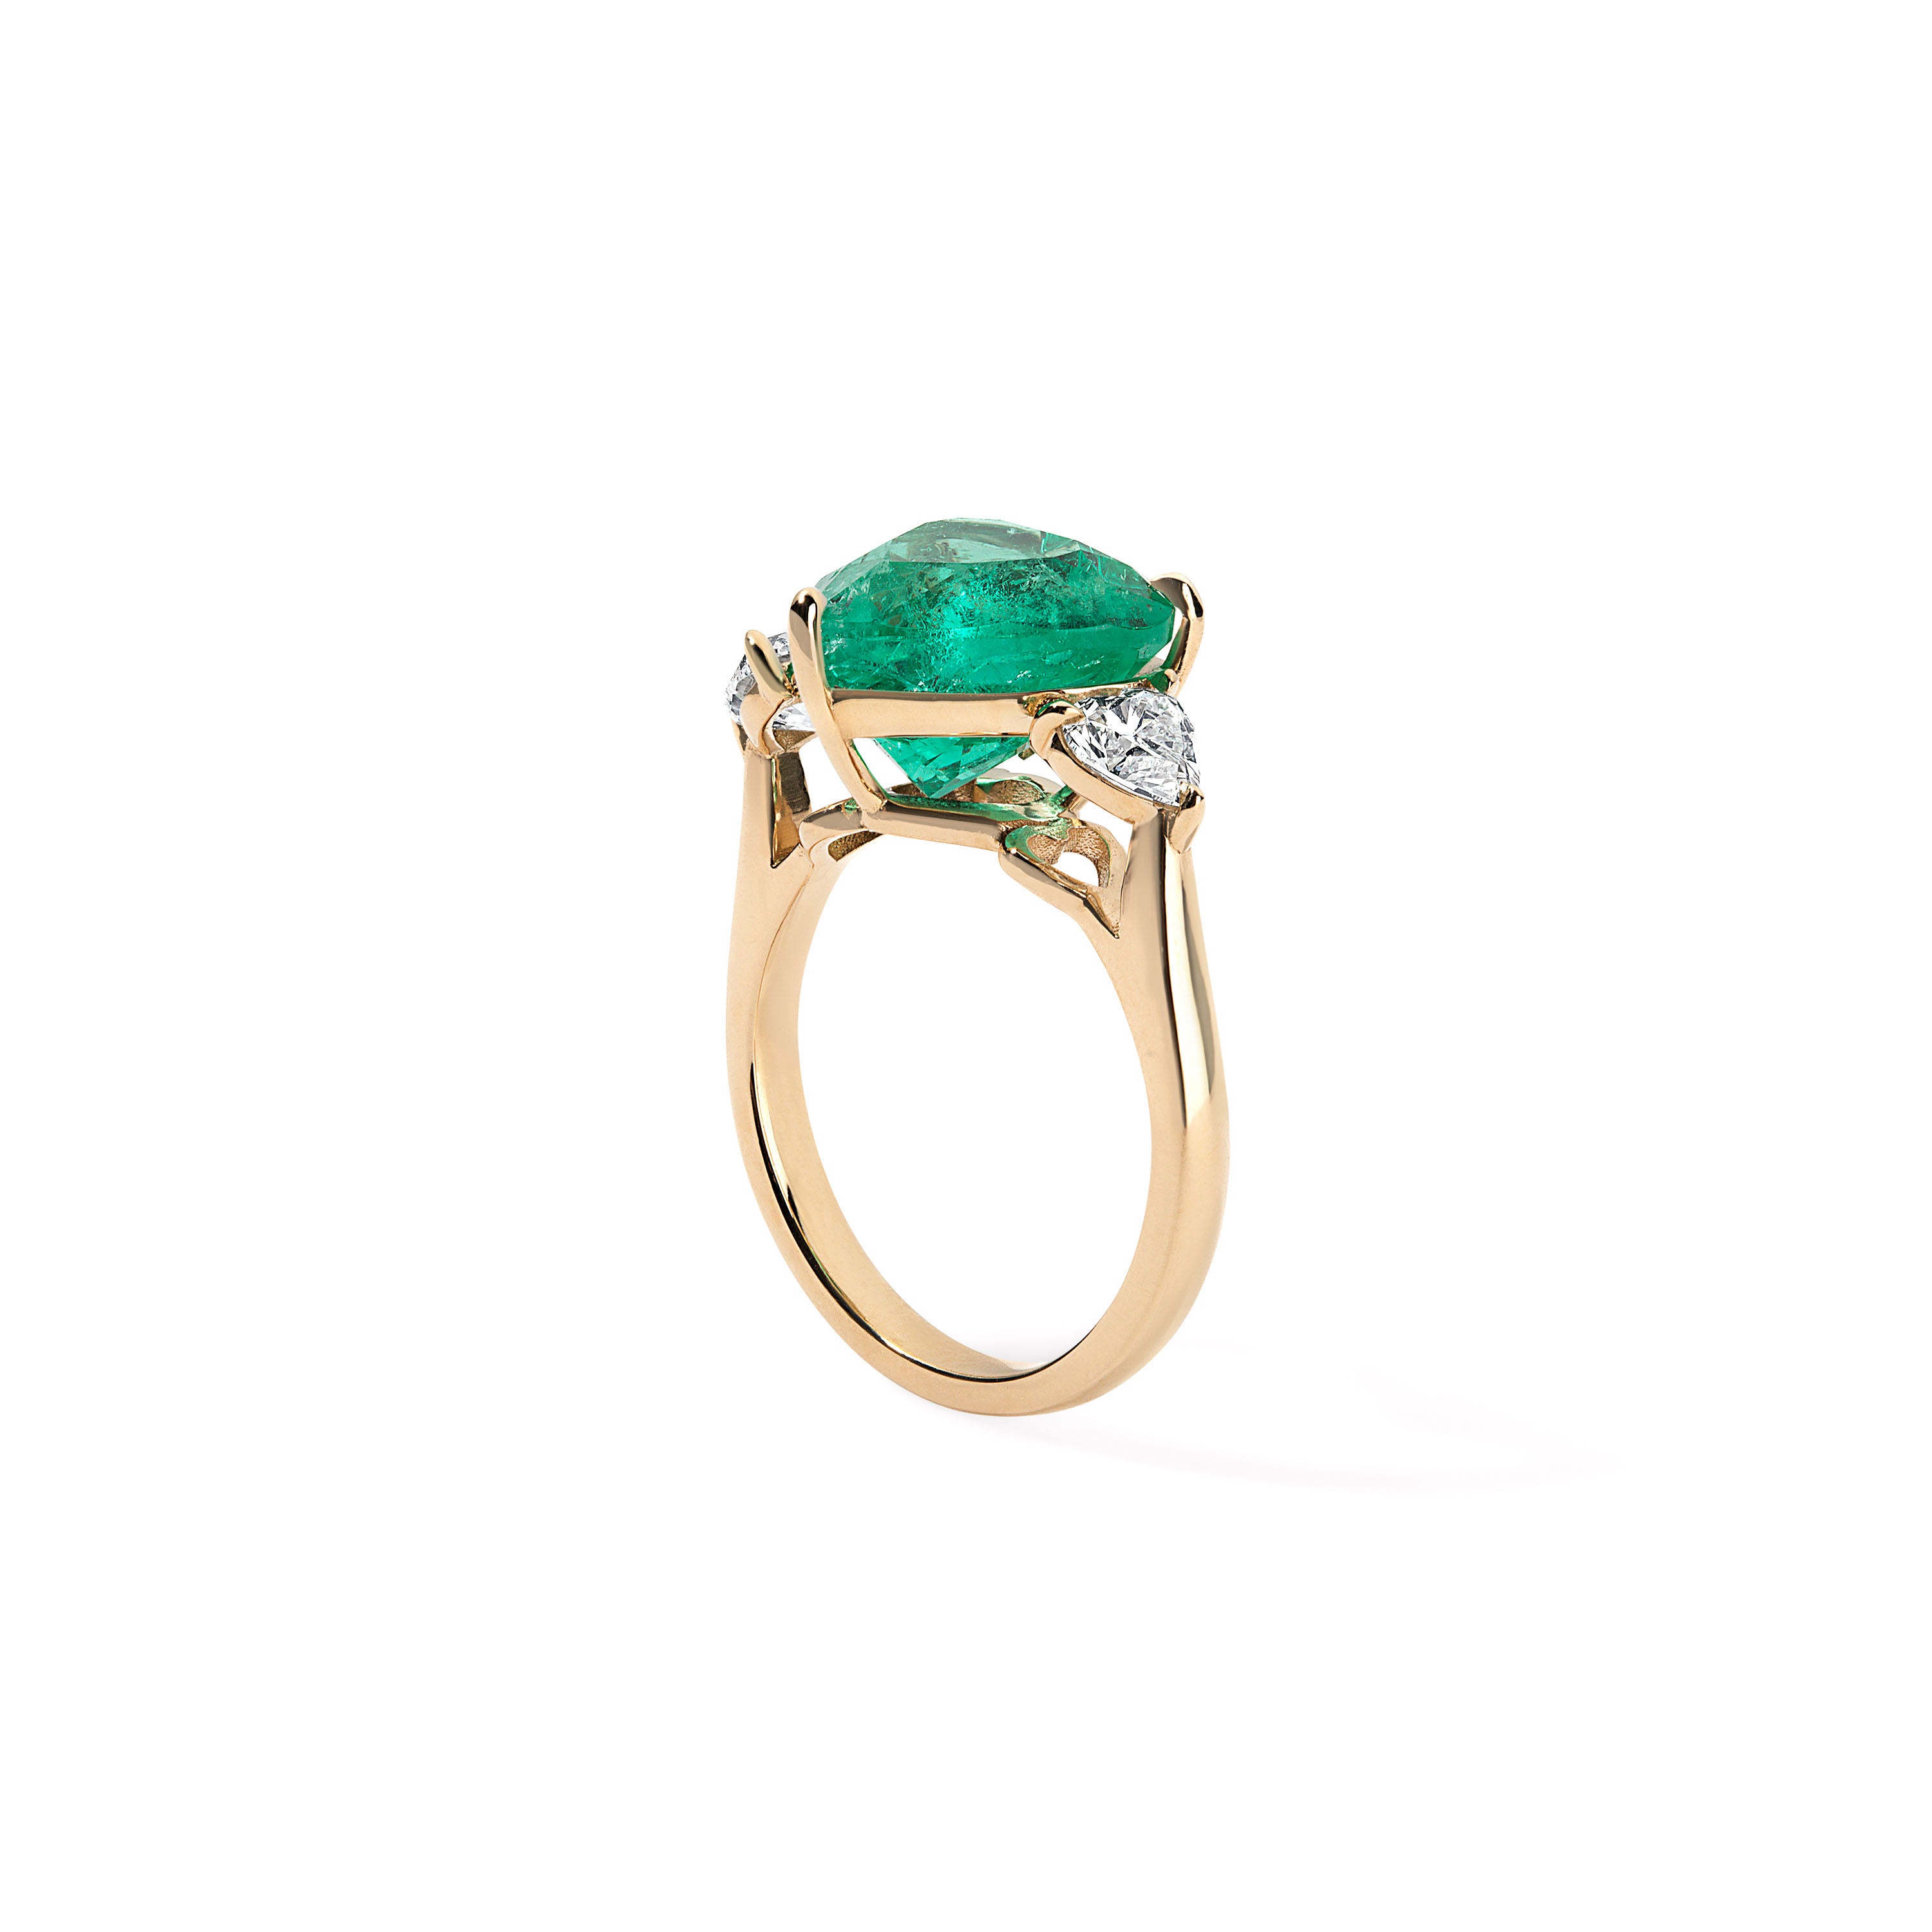 Emerald and Diamond Hearts Ring